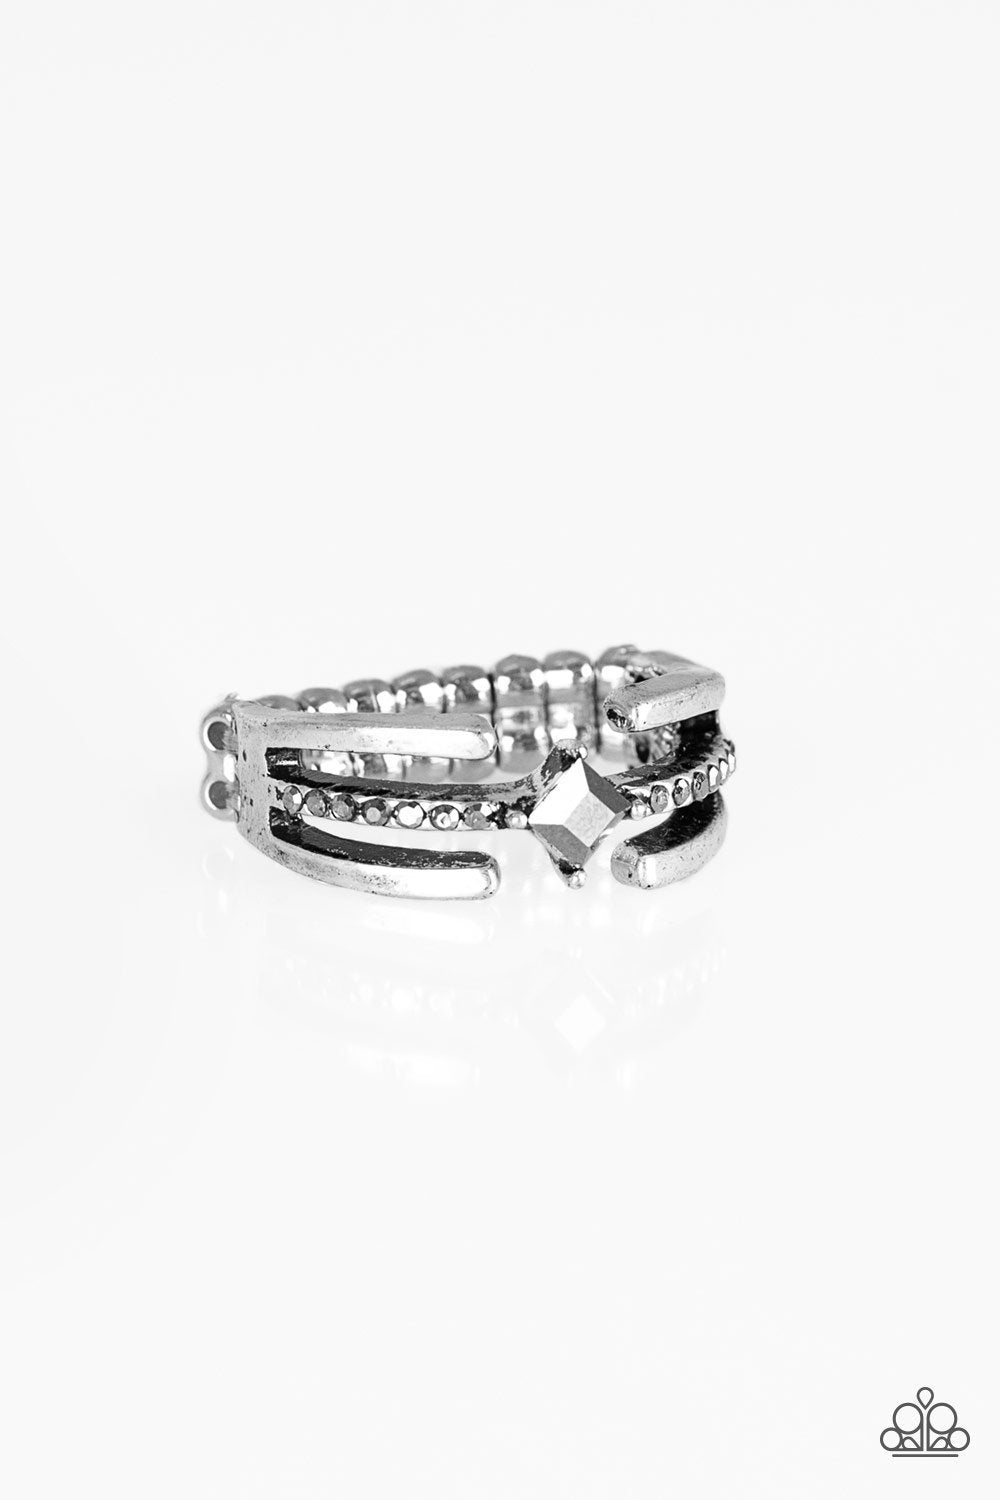 City Center Silver Hematite Rhinestone Ring - Paparazzi Accessories - lightbox -CarasShop.com - $5 Jewelry by Cara Jewels